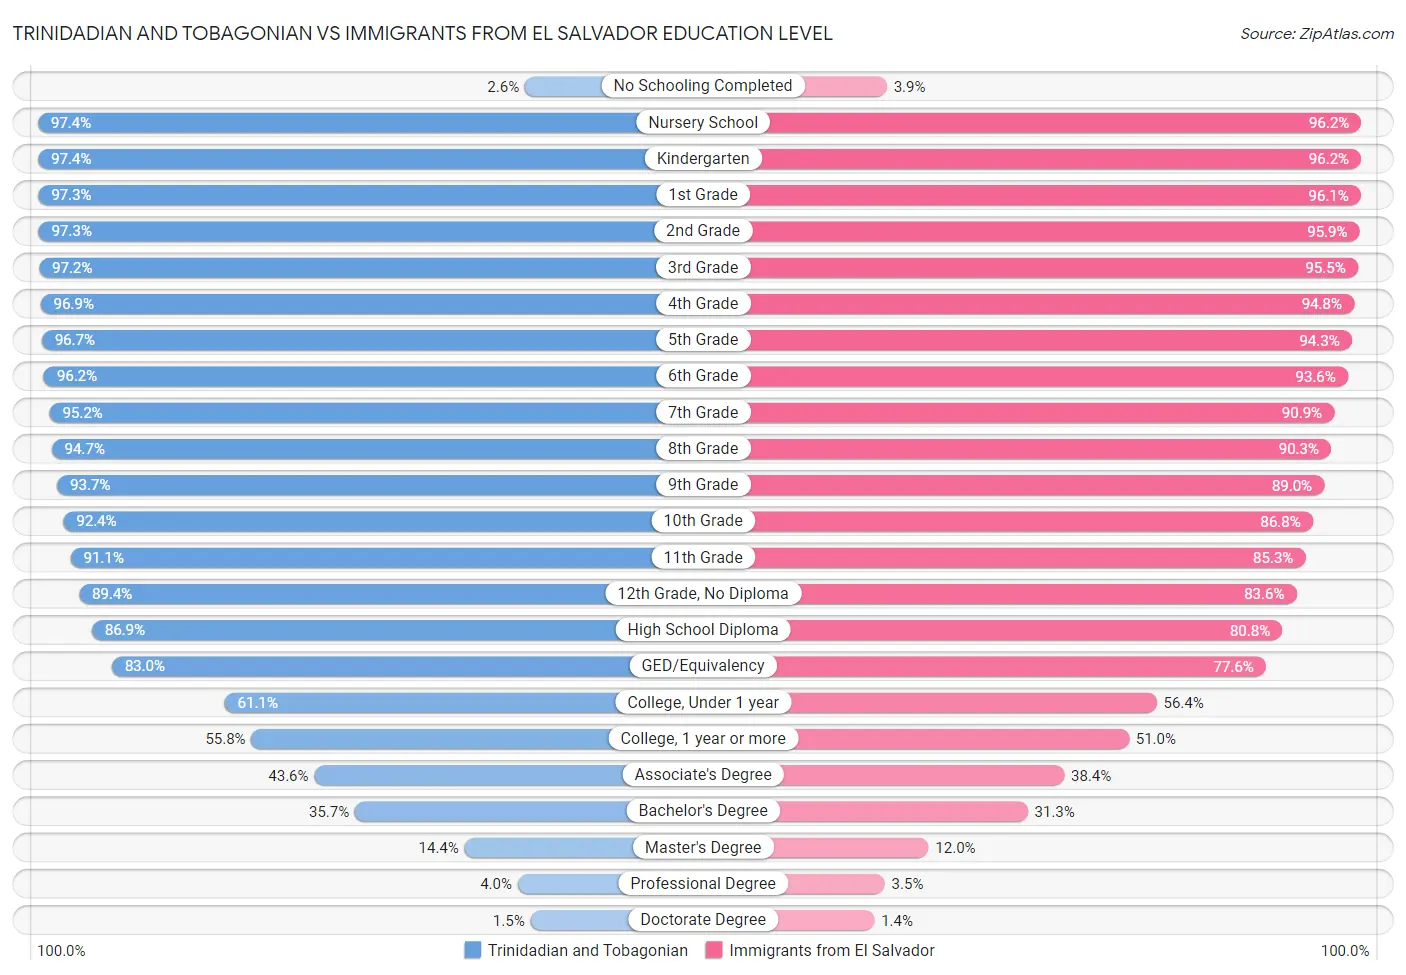 Trinidadian and Tobagonian vs Immigrants from El Salvador Education Level